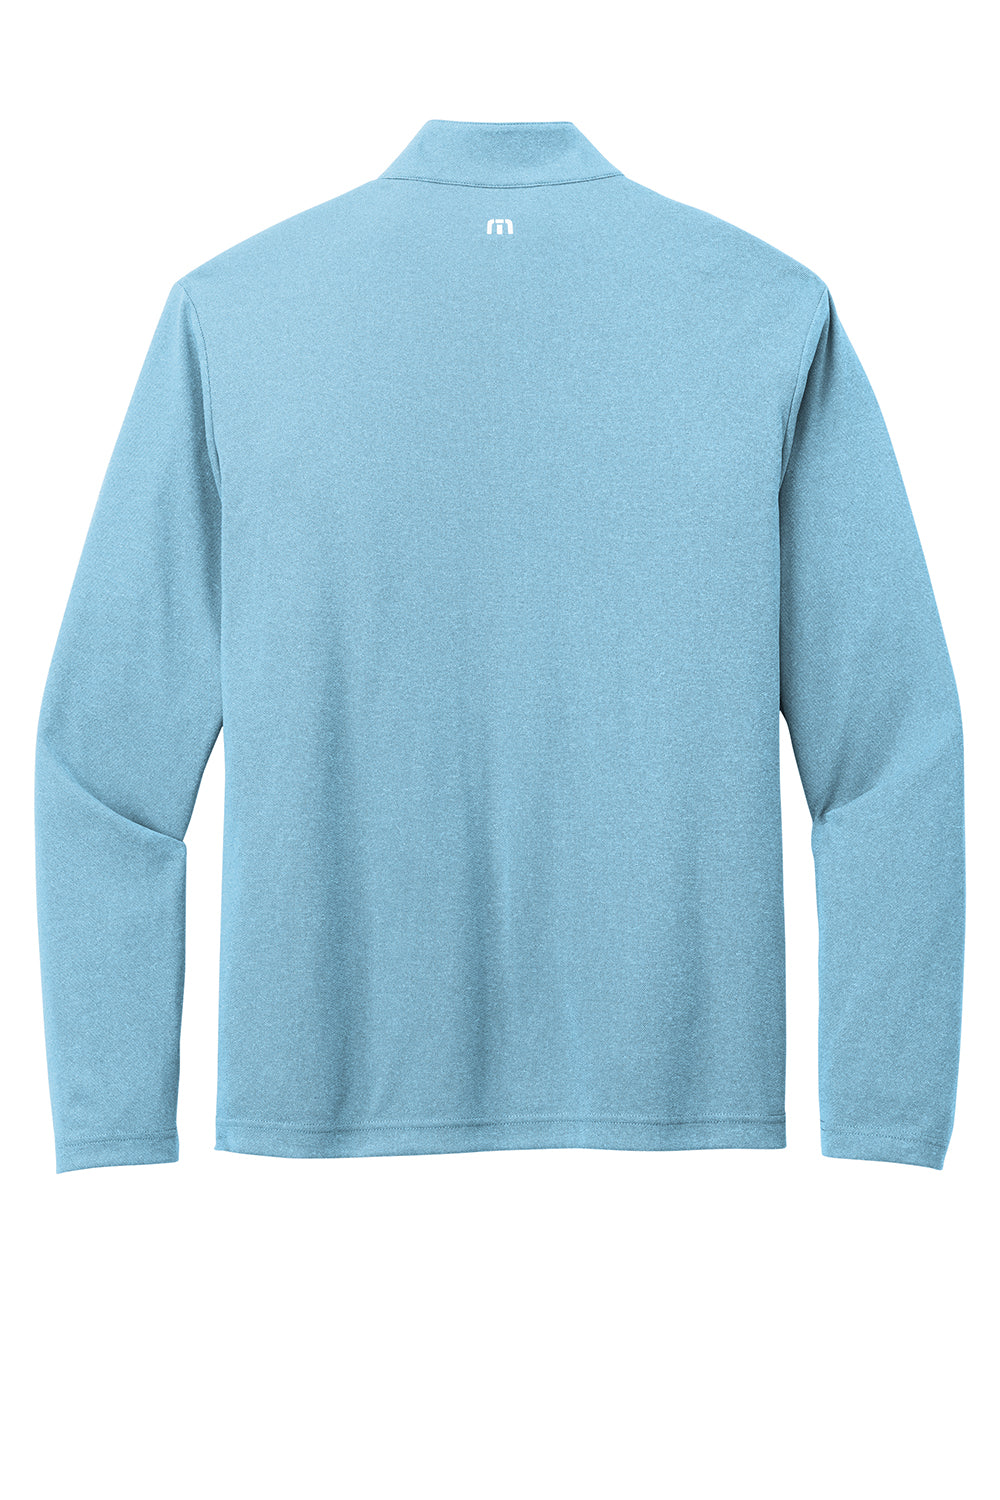 TravisMathew TM1MY397 Mens Coto Performance Wrinkle Resistant 1/4 Zip Sweatshirt Heather Brilliant Blue Flat Back